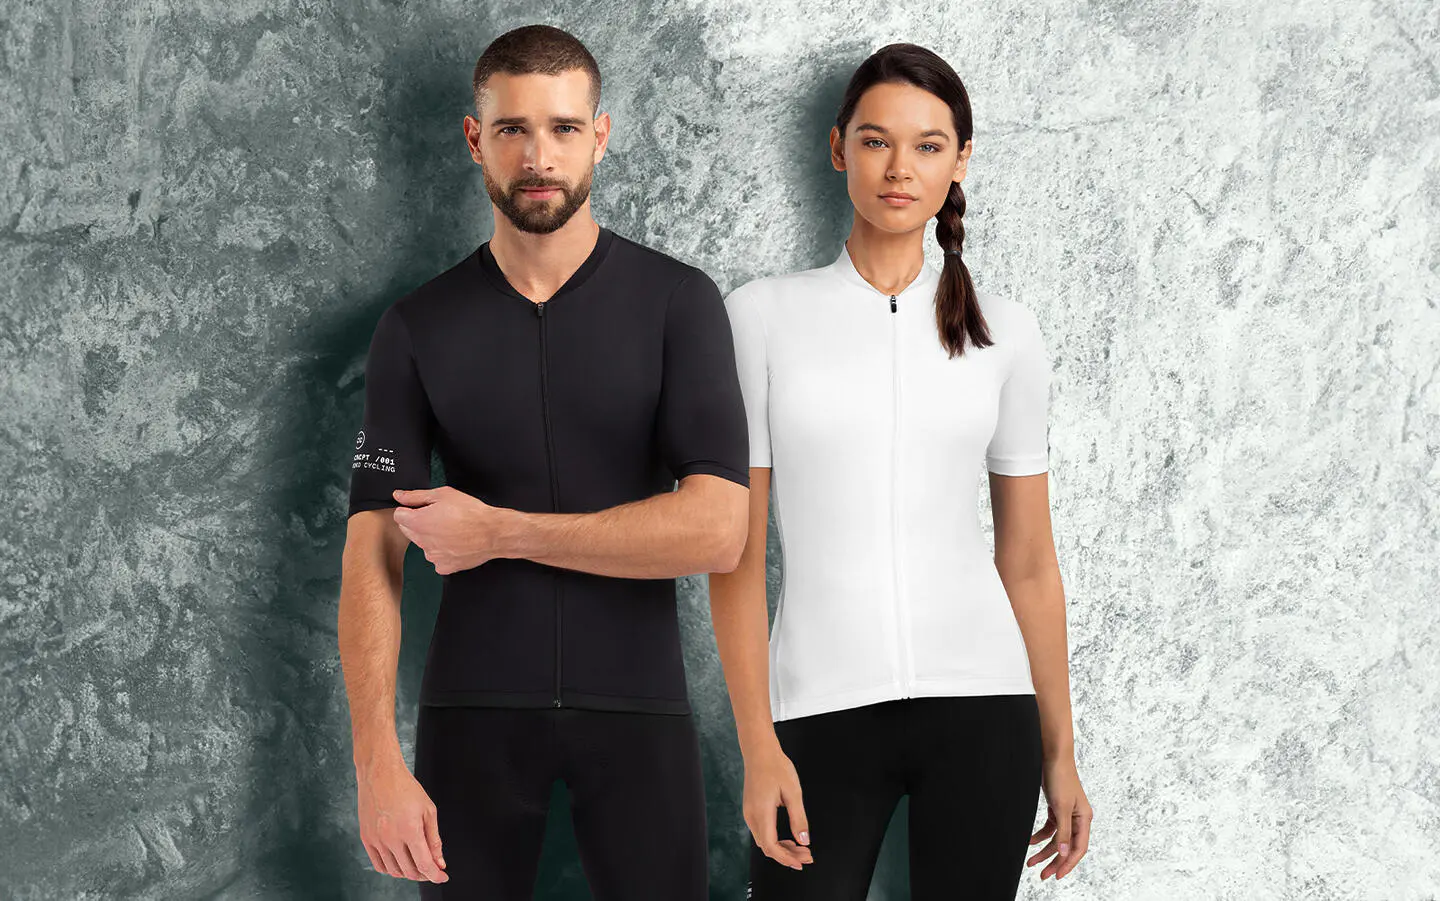 Men's Mesh Base Layer - Black Long Sleeve Cycling Undershirt - Urban  Cycling Apparel